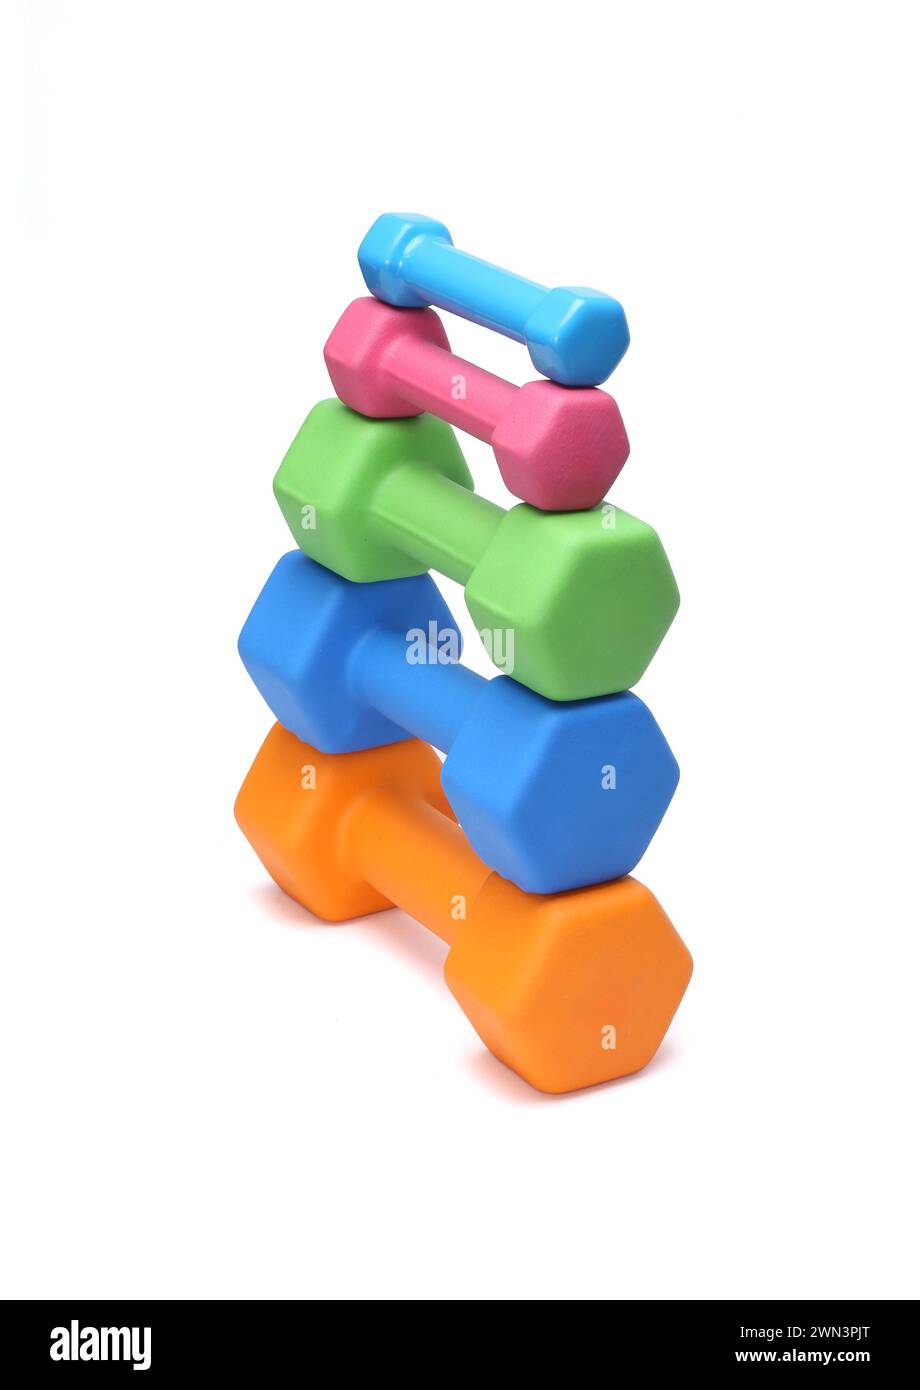 colorful rubber coated dumbbells isolated on white background Stock Photo